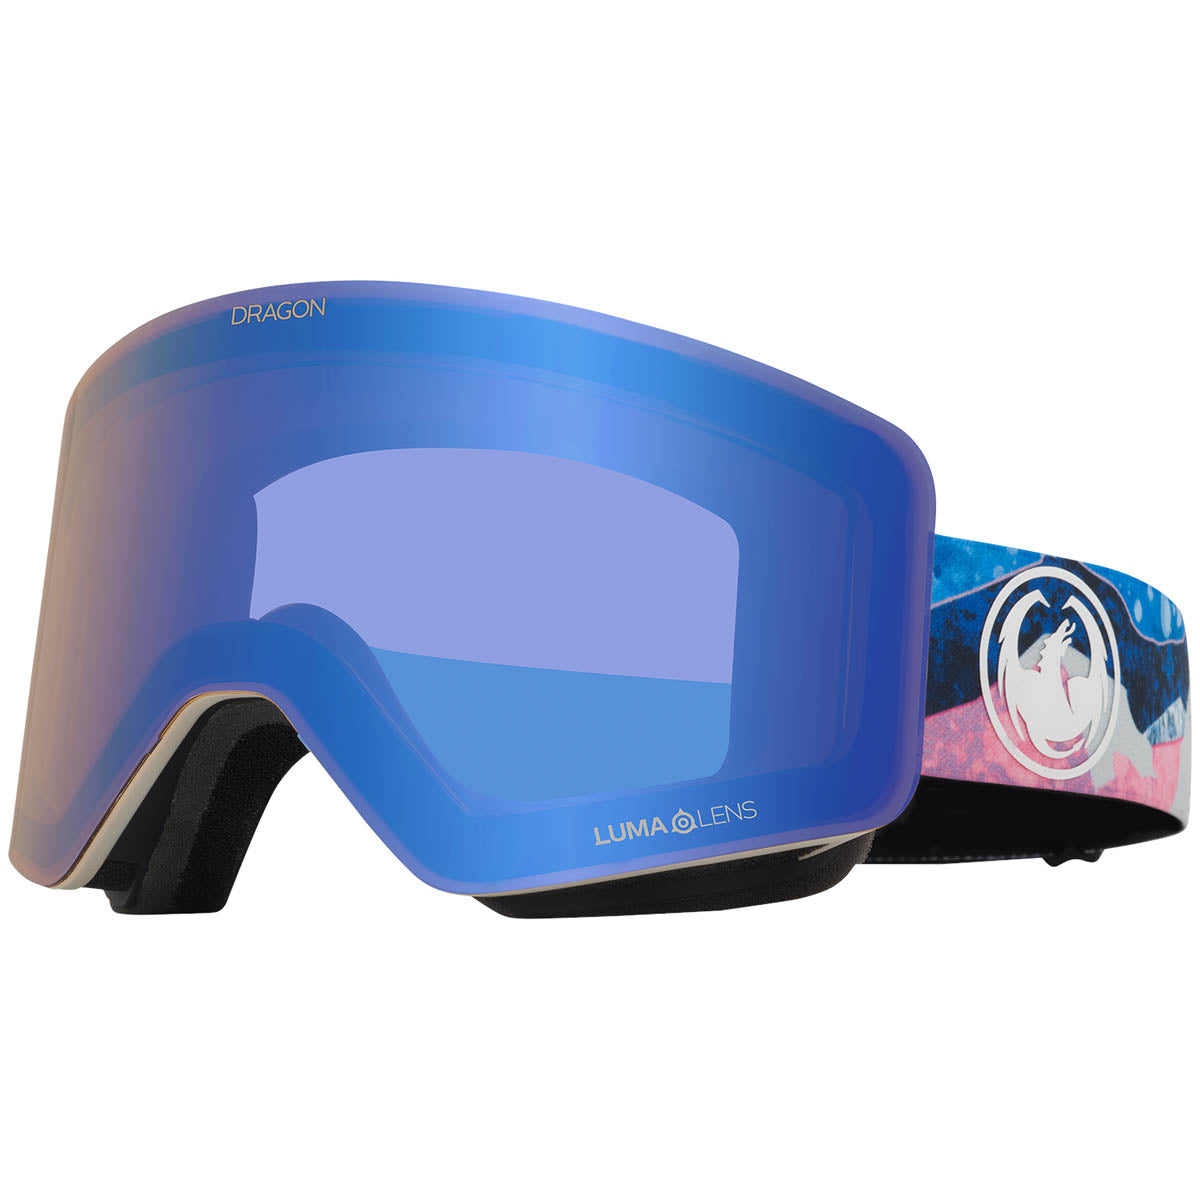 Dragon R1 Otg Snowboard Goggles - Mountain Bliss/Lumalens Flash Blue image 1